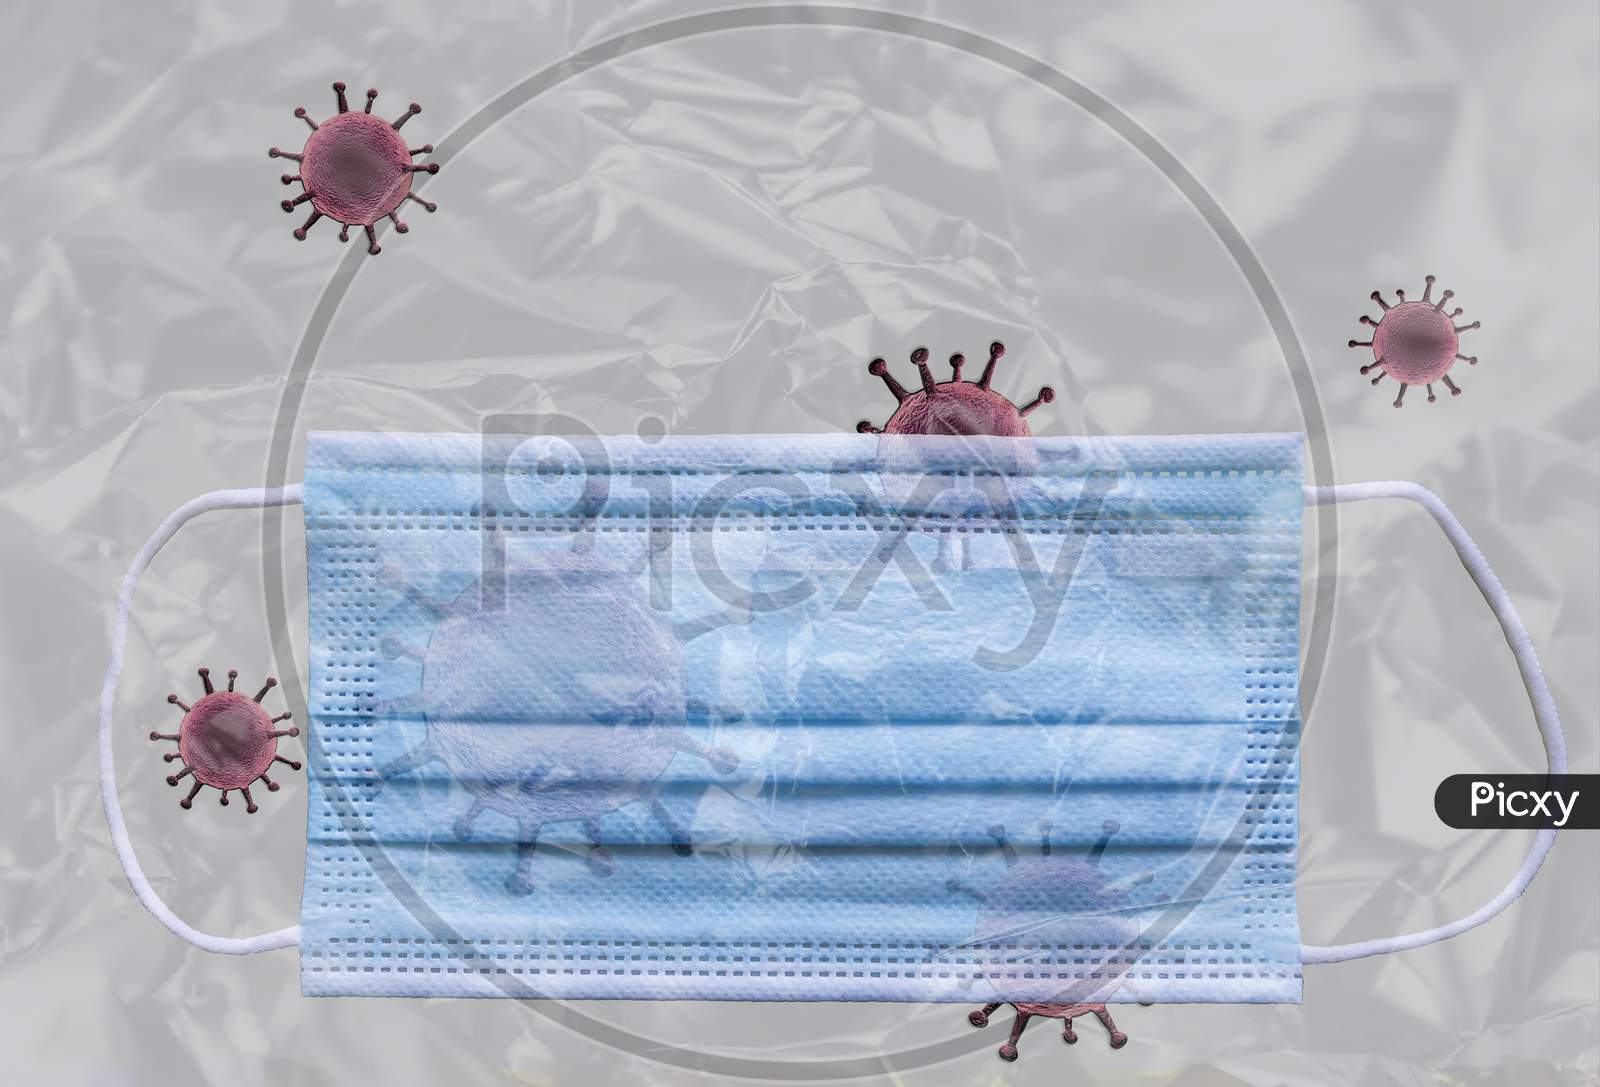 Medical corona virus mask behind plastic film with the corona virus on and around it